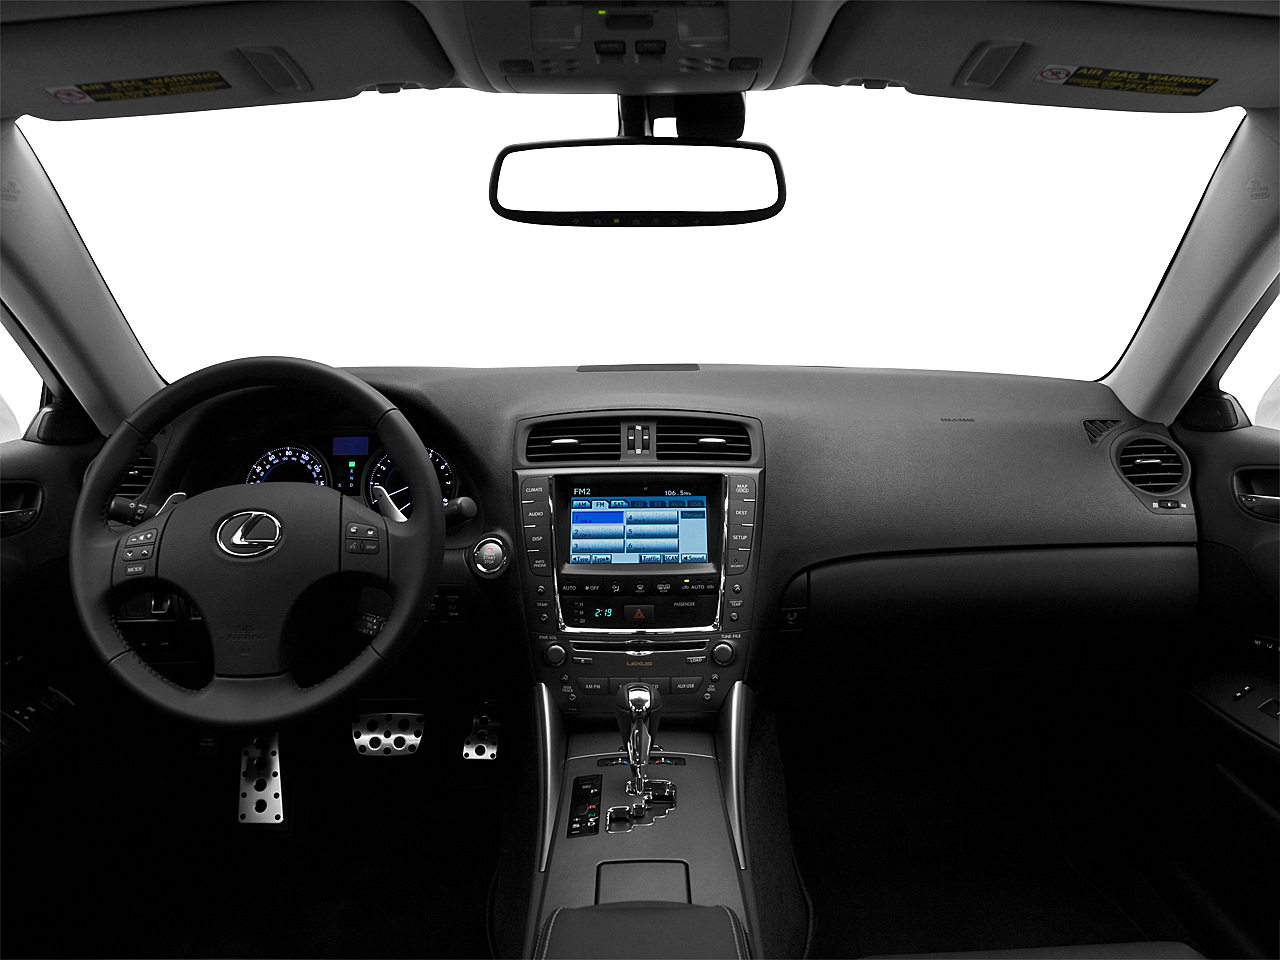 2010 Lexus IS 250 4dr Sedan 6A - Research - GrooveCar